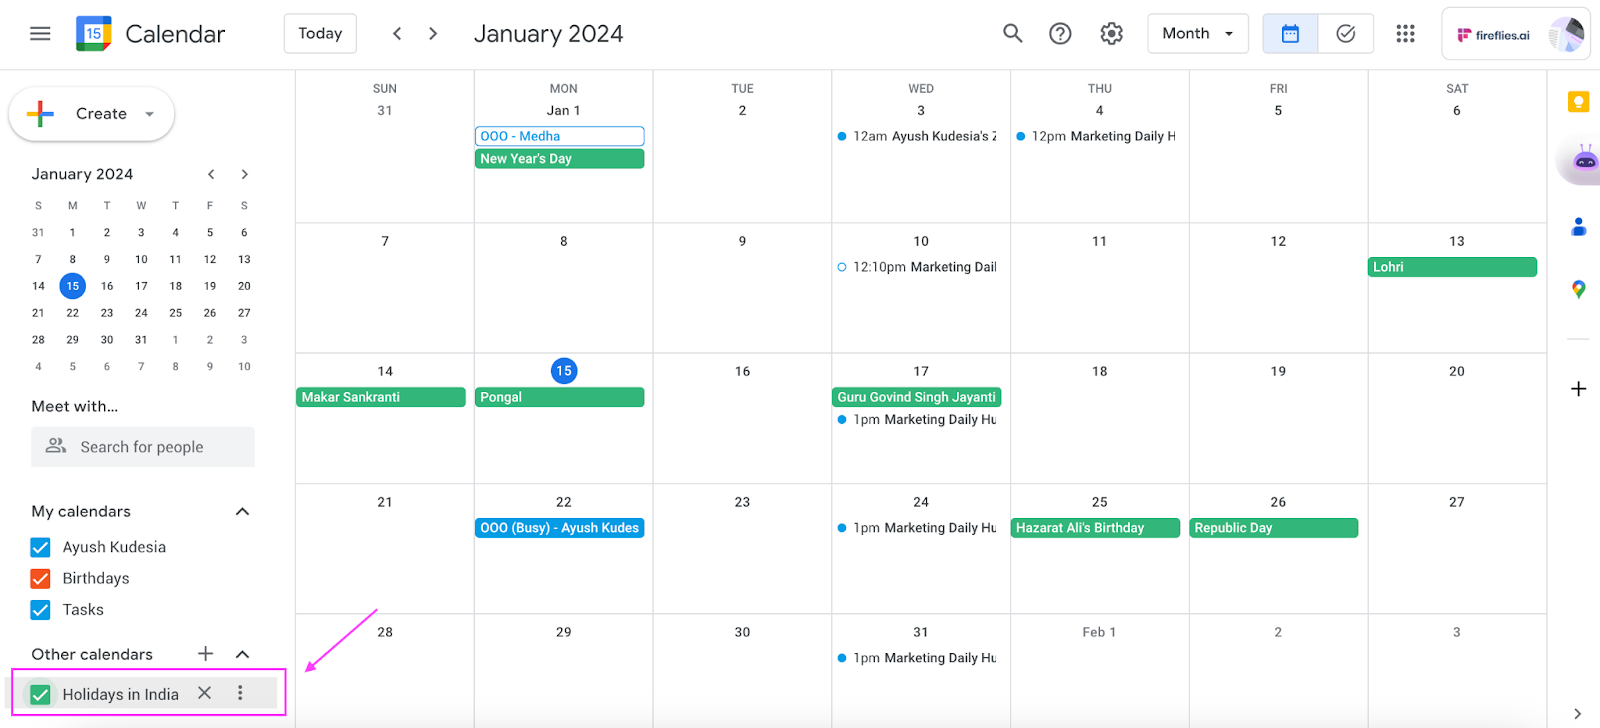 How to change the color scheme in Google Calendar - On desktop